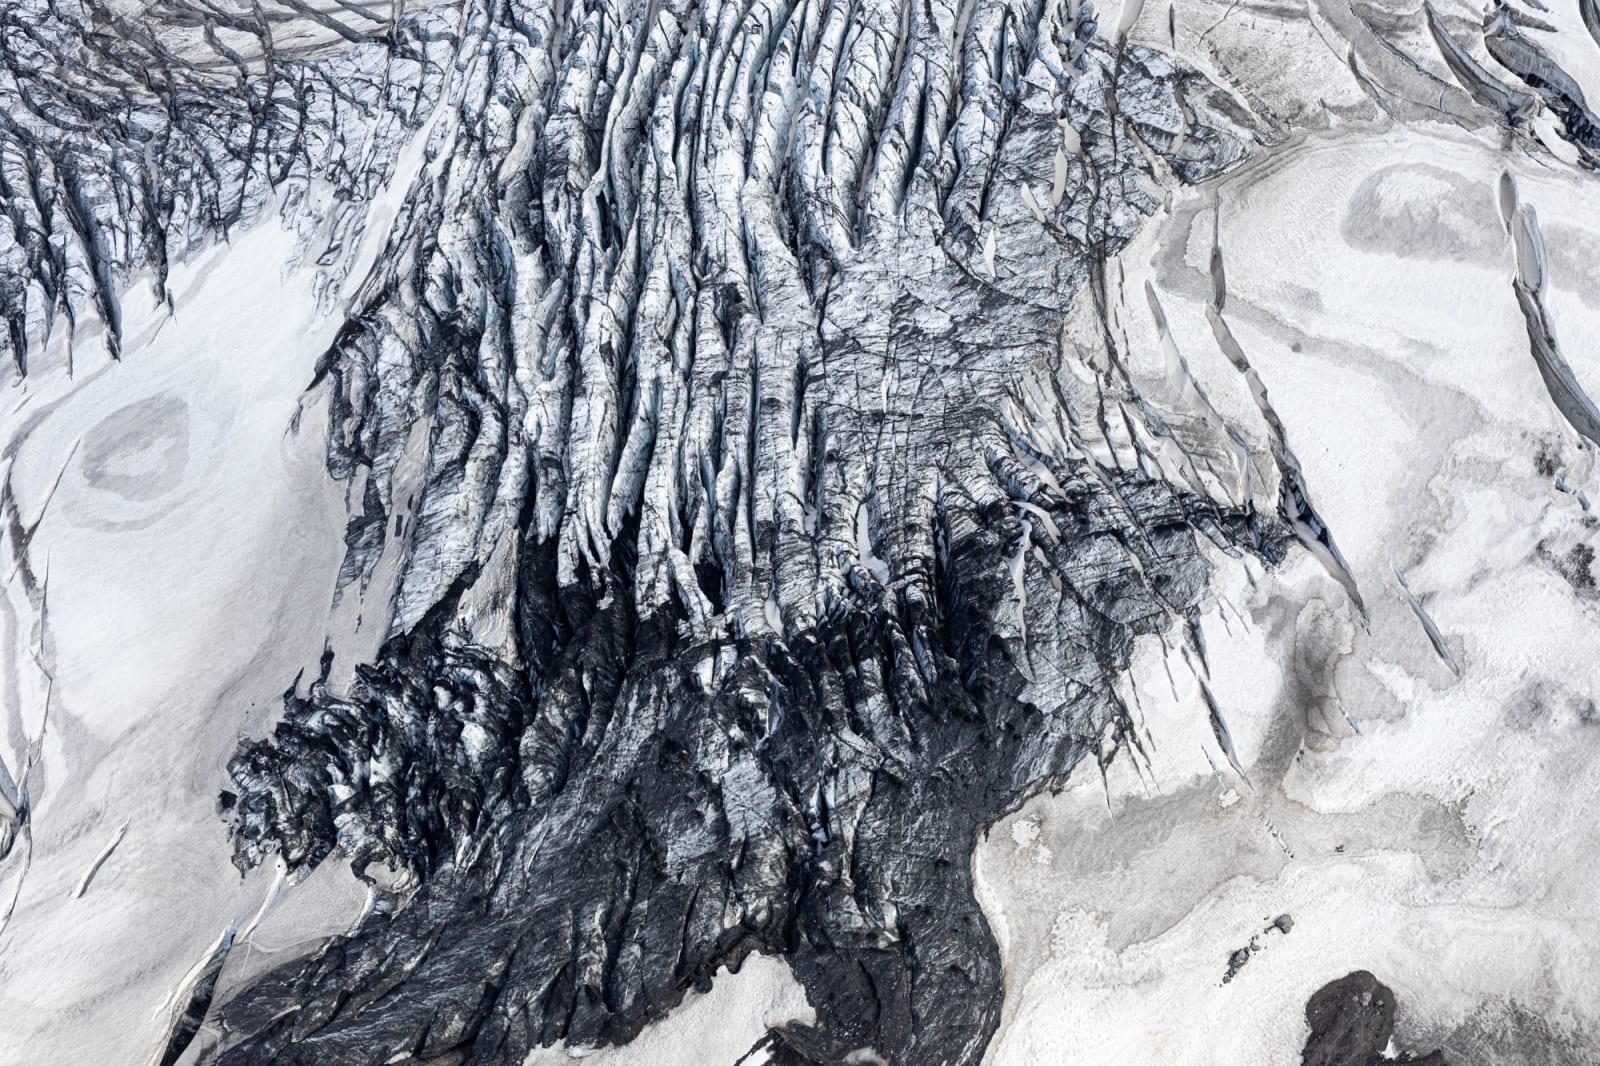 Matjaž Krivic, Islandski ledenik 09 / Iceland Glacier 09, 2019